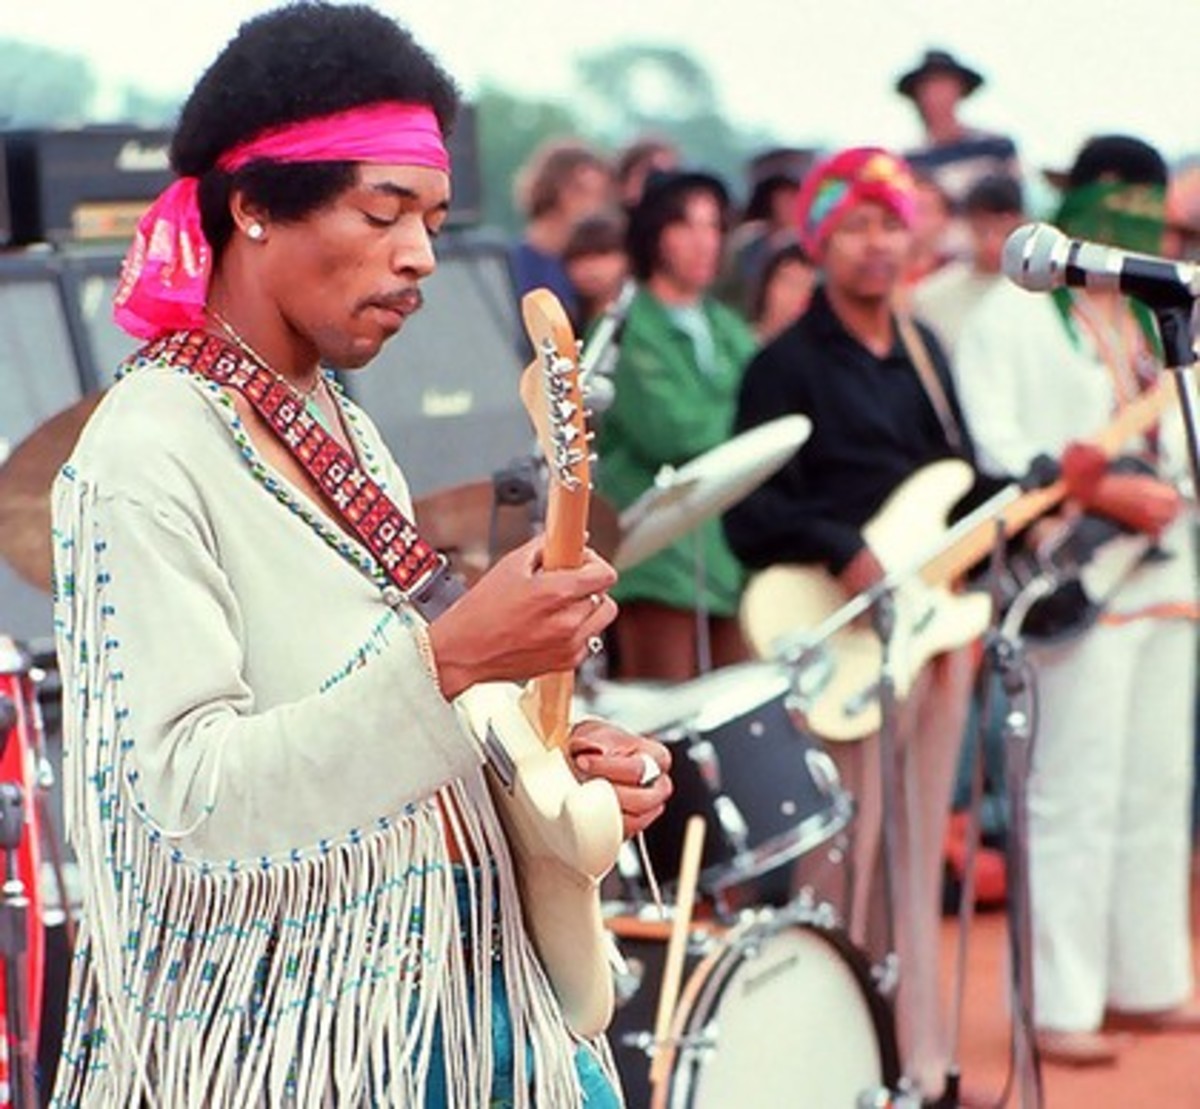 Hendrix at Woodstock 